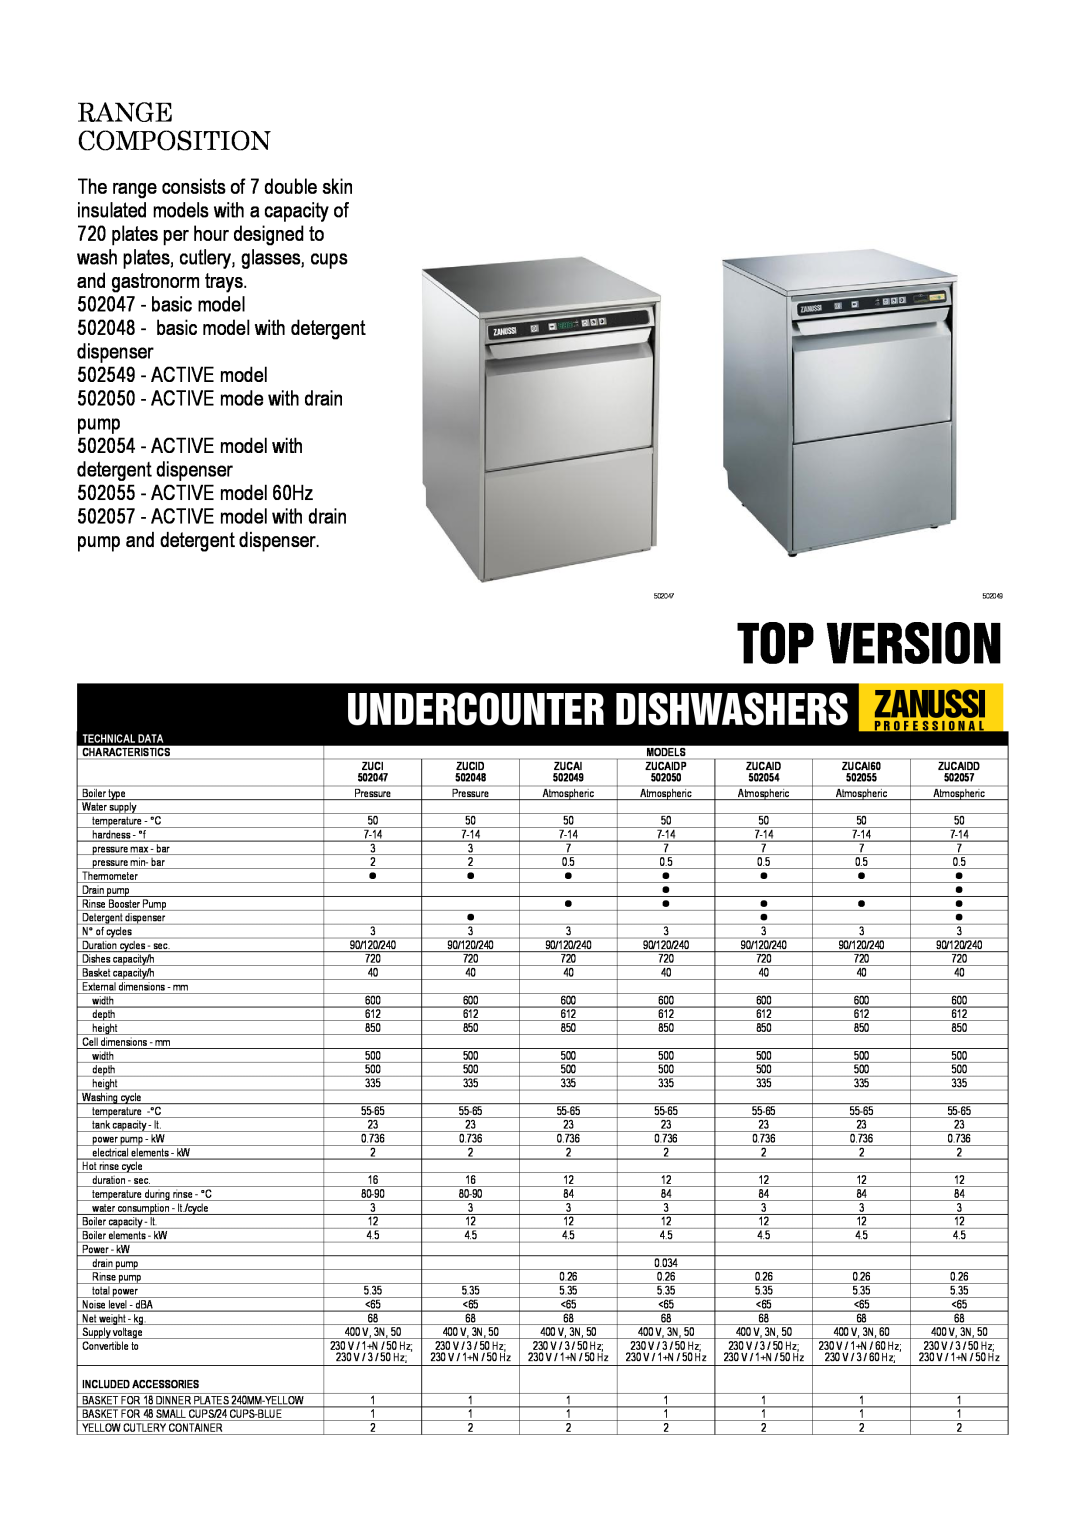 Zanussi ZUCID dimensions Range Composition, Top Version, Undercounter Dishwashers, Zanussi, basic model, ACTIVE model 